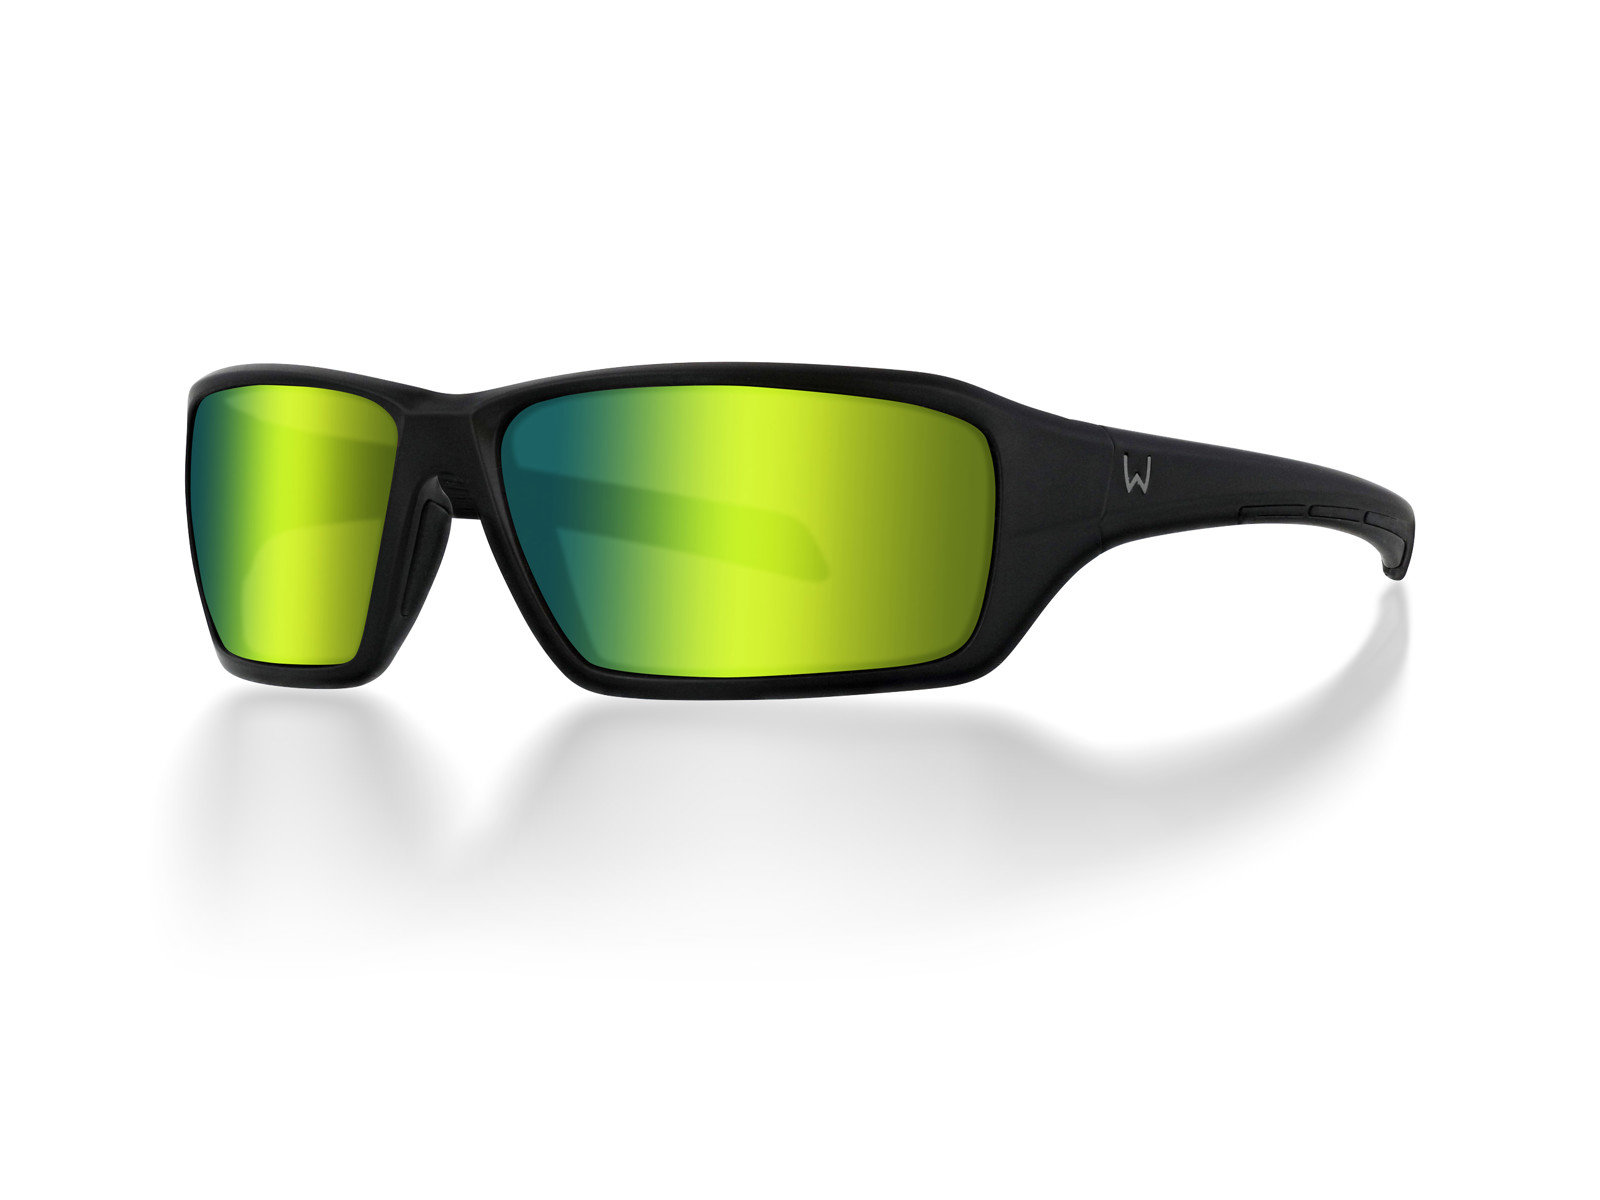 Westin W6 Sport 15 Matte Black Sunglasses - LB Green LM Green AR Green